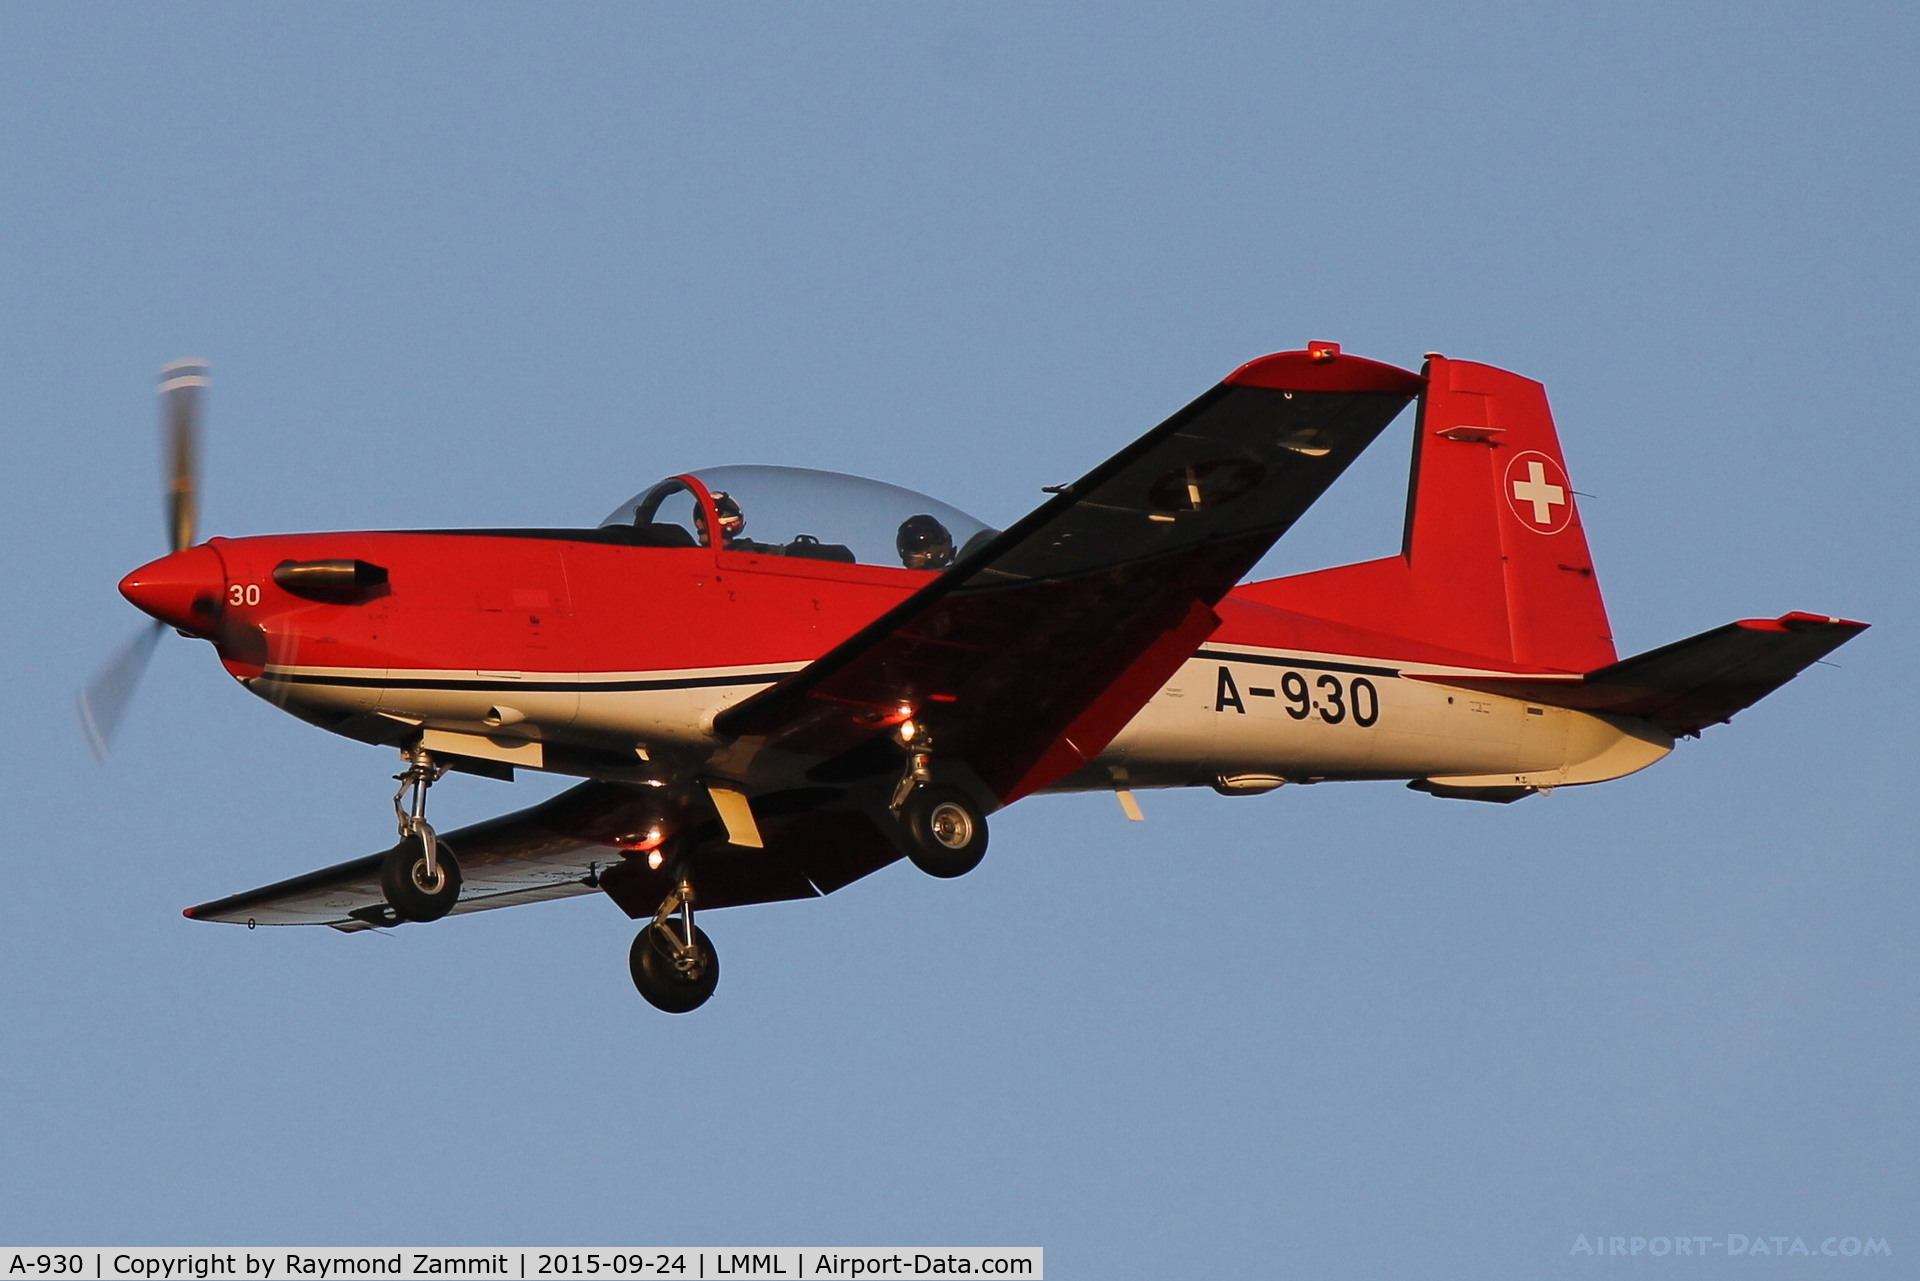 A-930, 1983 Pilatus PC-7 Turbo Trainer C/N 338, Pilatus PC-7 A-930 Swiss Air Force